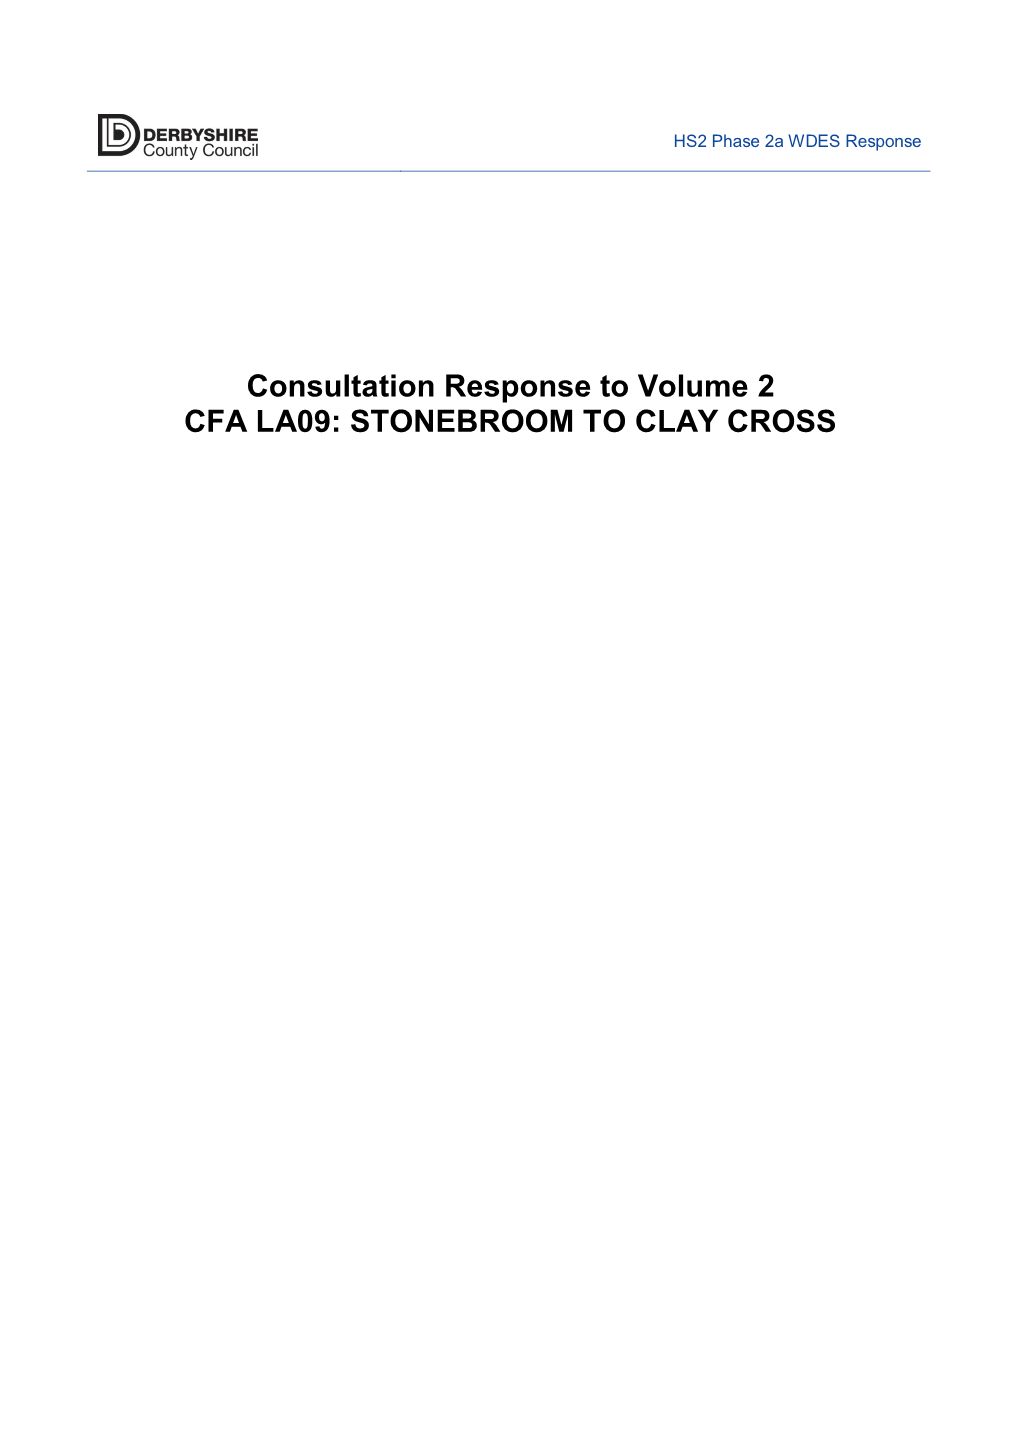 HS2 Consultation Response LA09 Stonebroom to Clay Cross